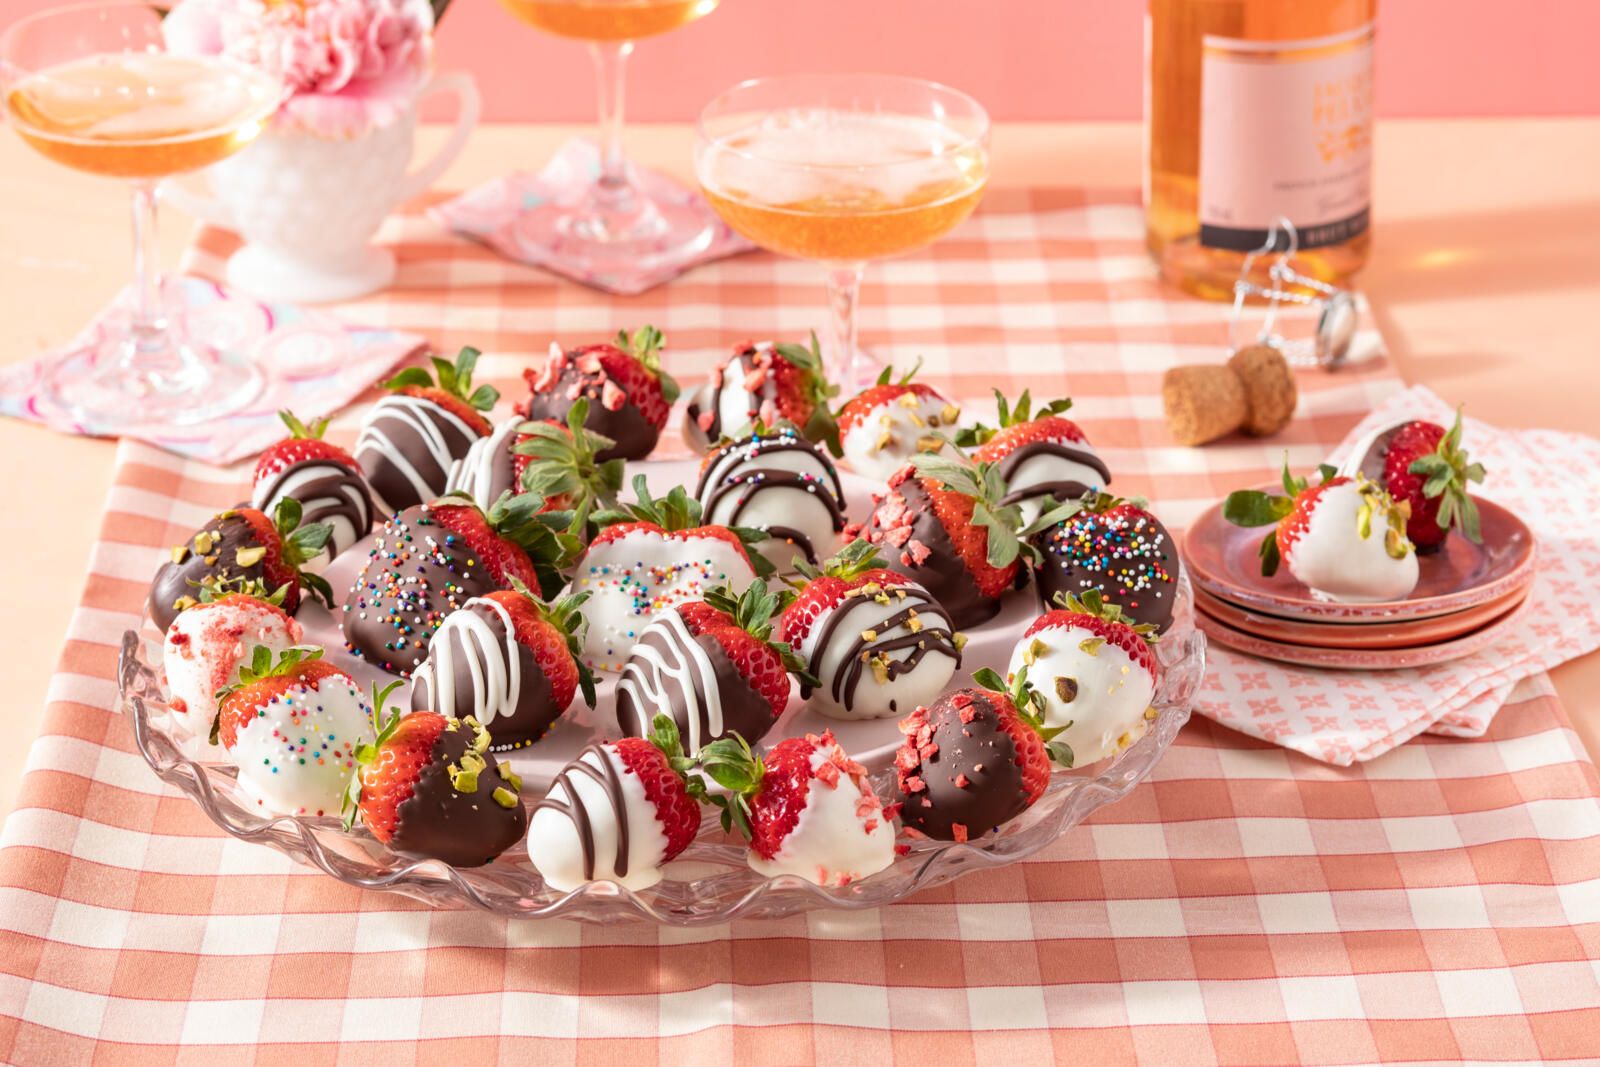 Best Chocolate Covered Strawberries Recipe - How to Make Chocolate-Covered  Strawberries